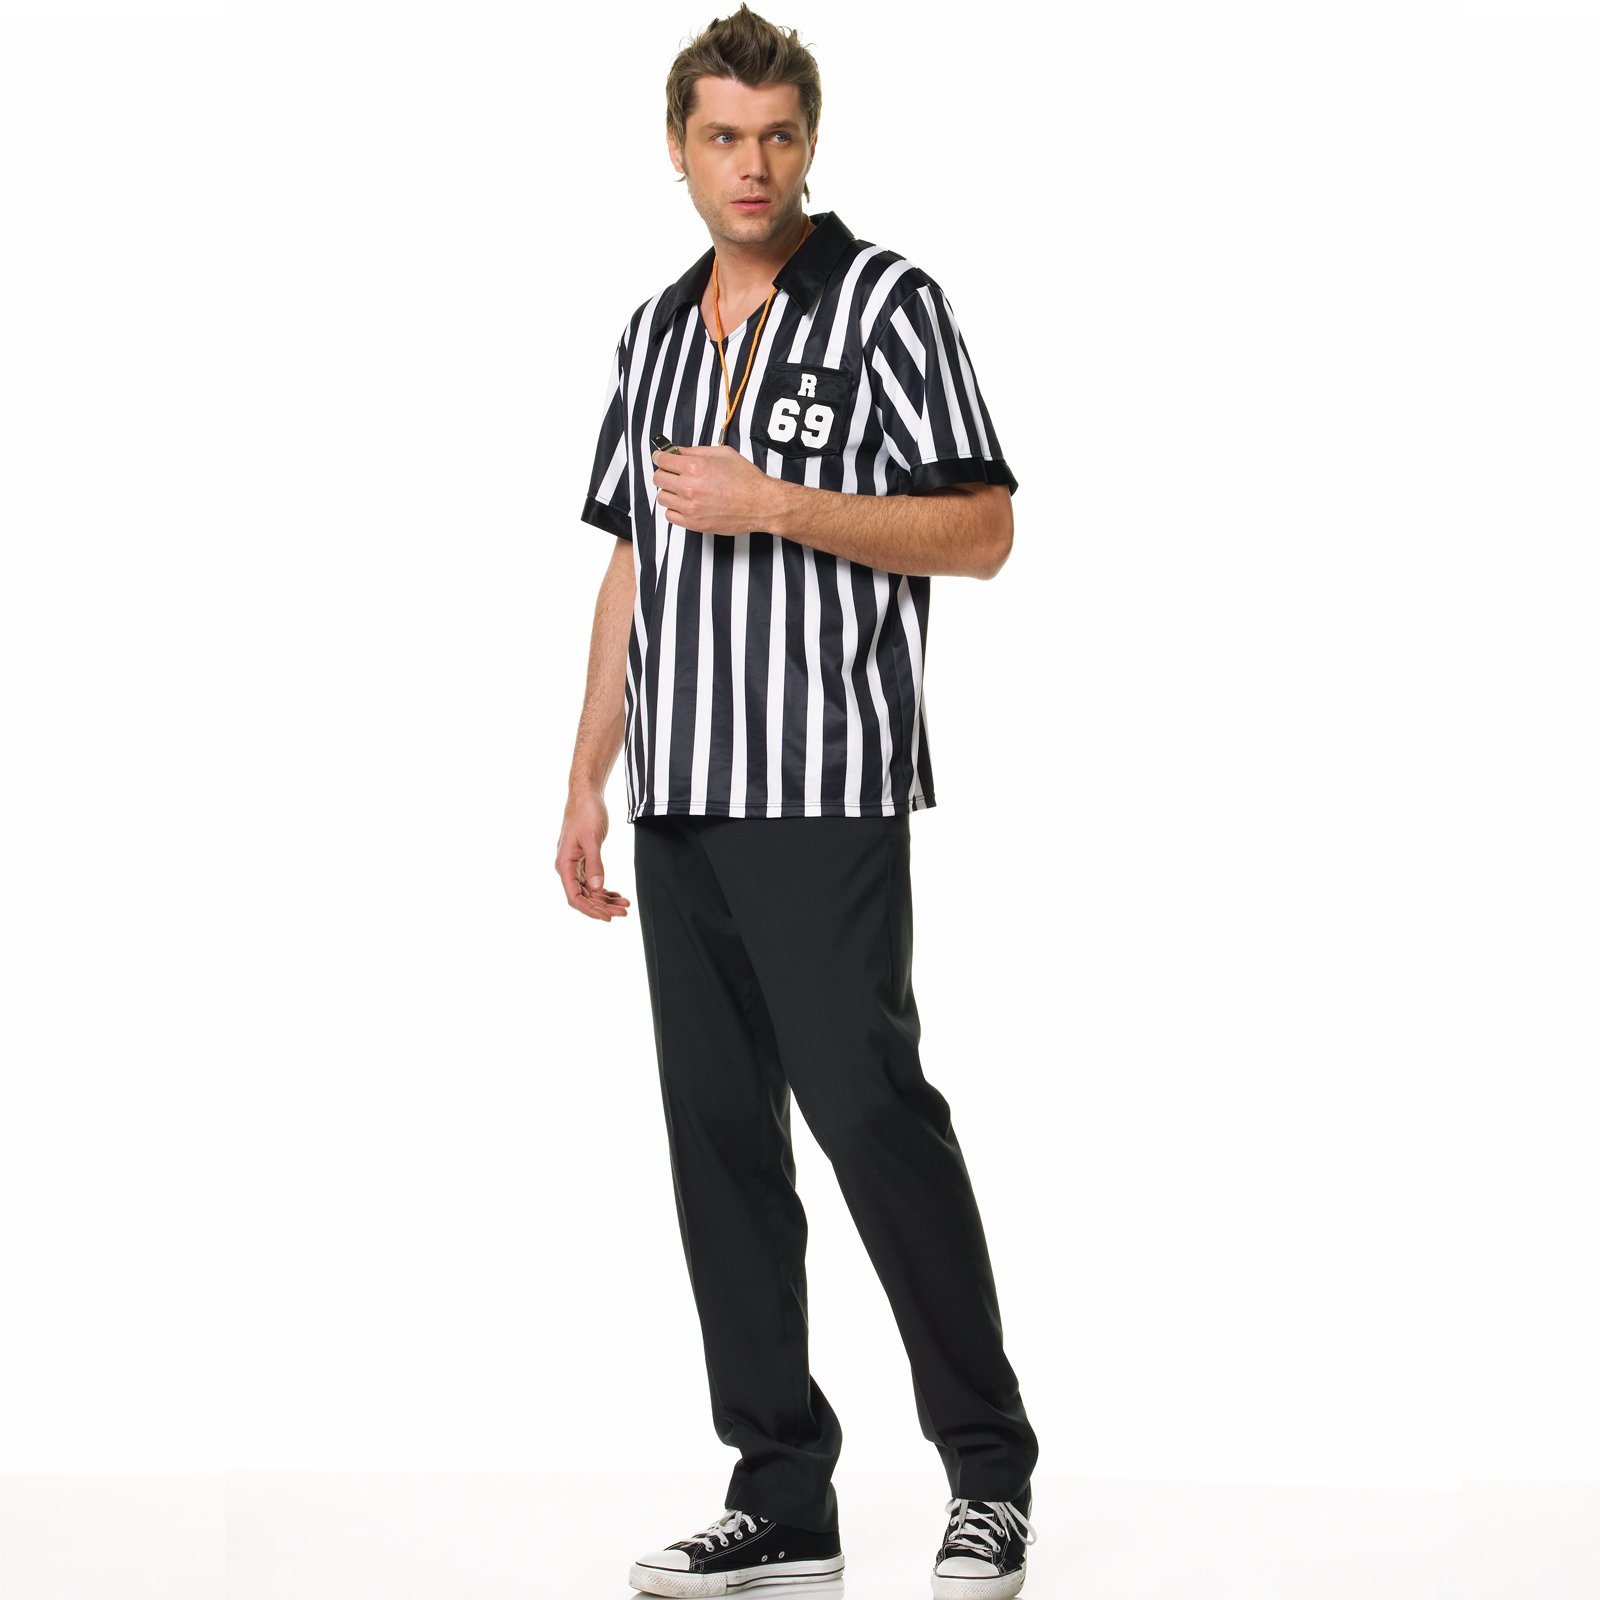 Referee Shirt Adult Costume